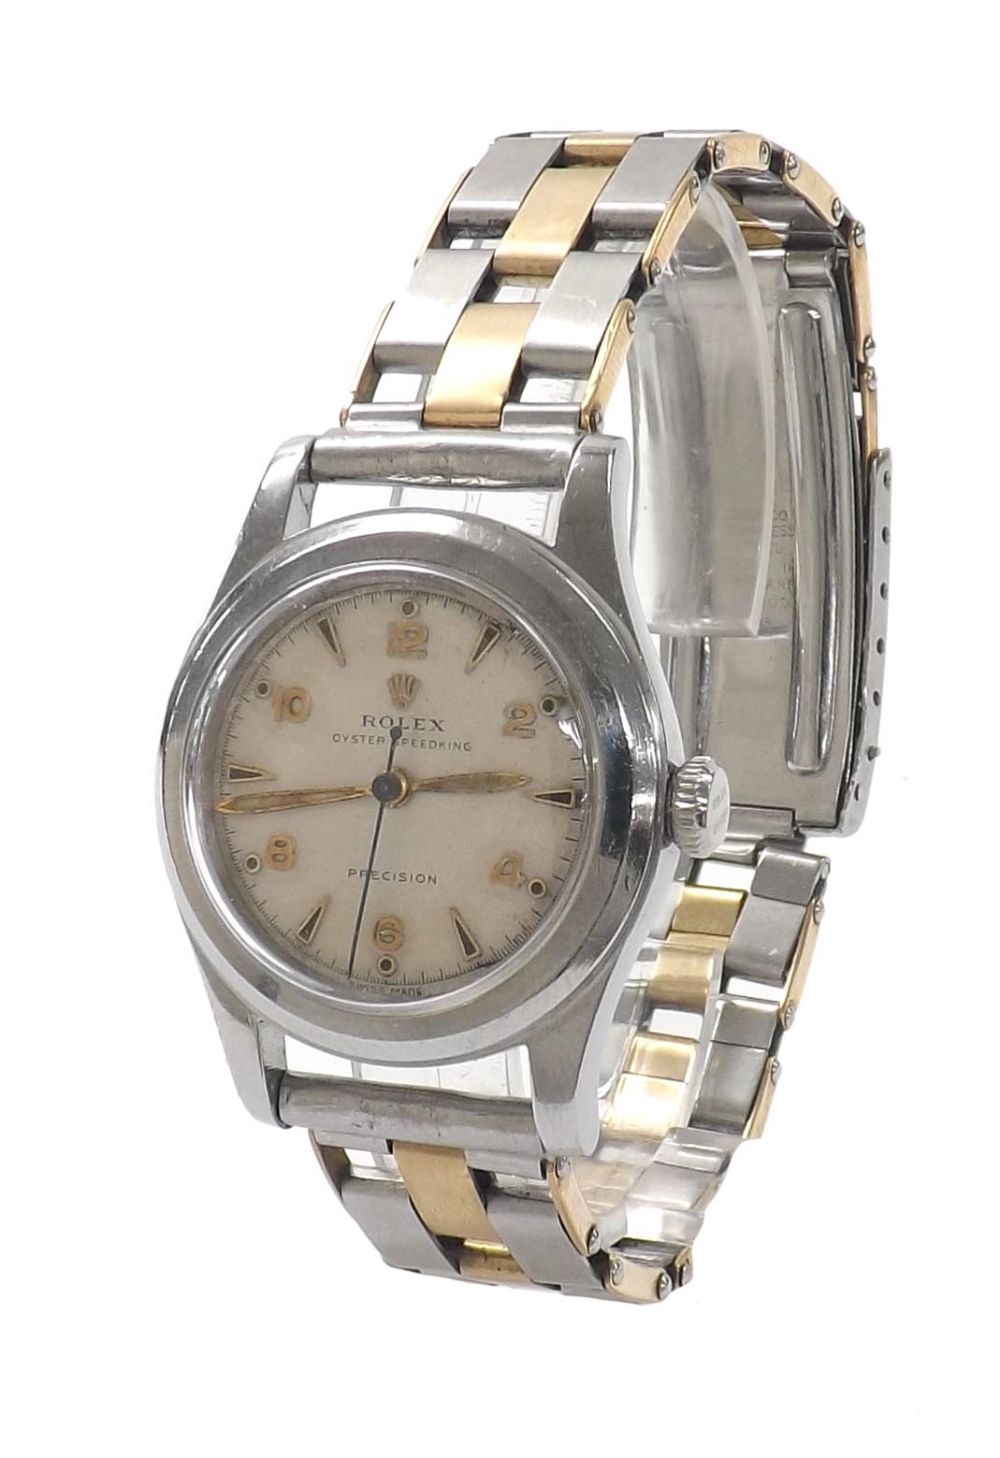 Rolex Oyster mid-size stainless steel gentleman's bracelet watch, ref. 3980, circa 1940s, serial no.